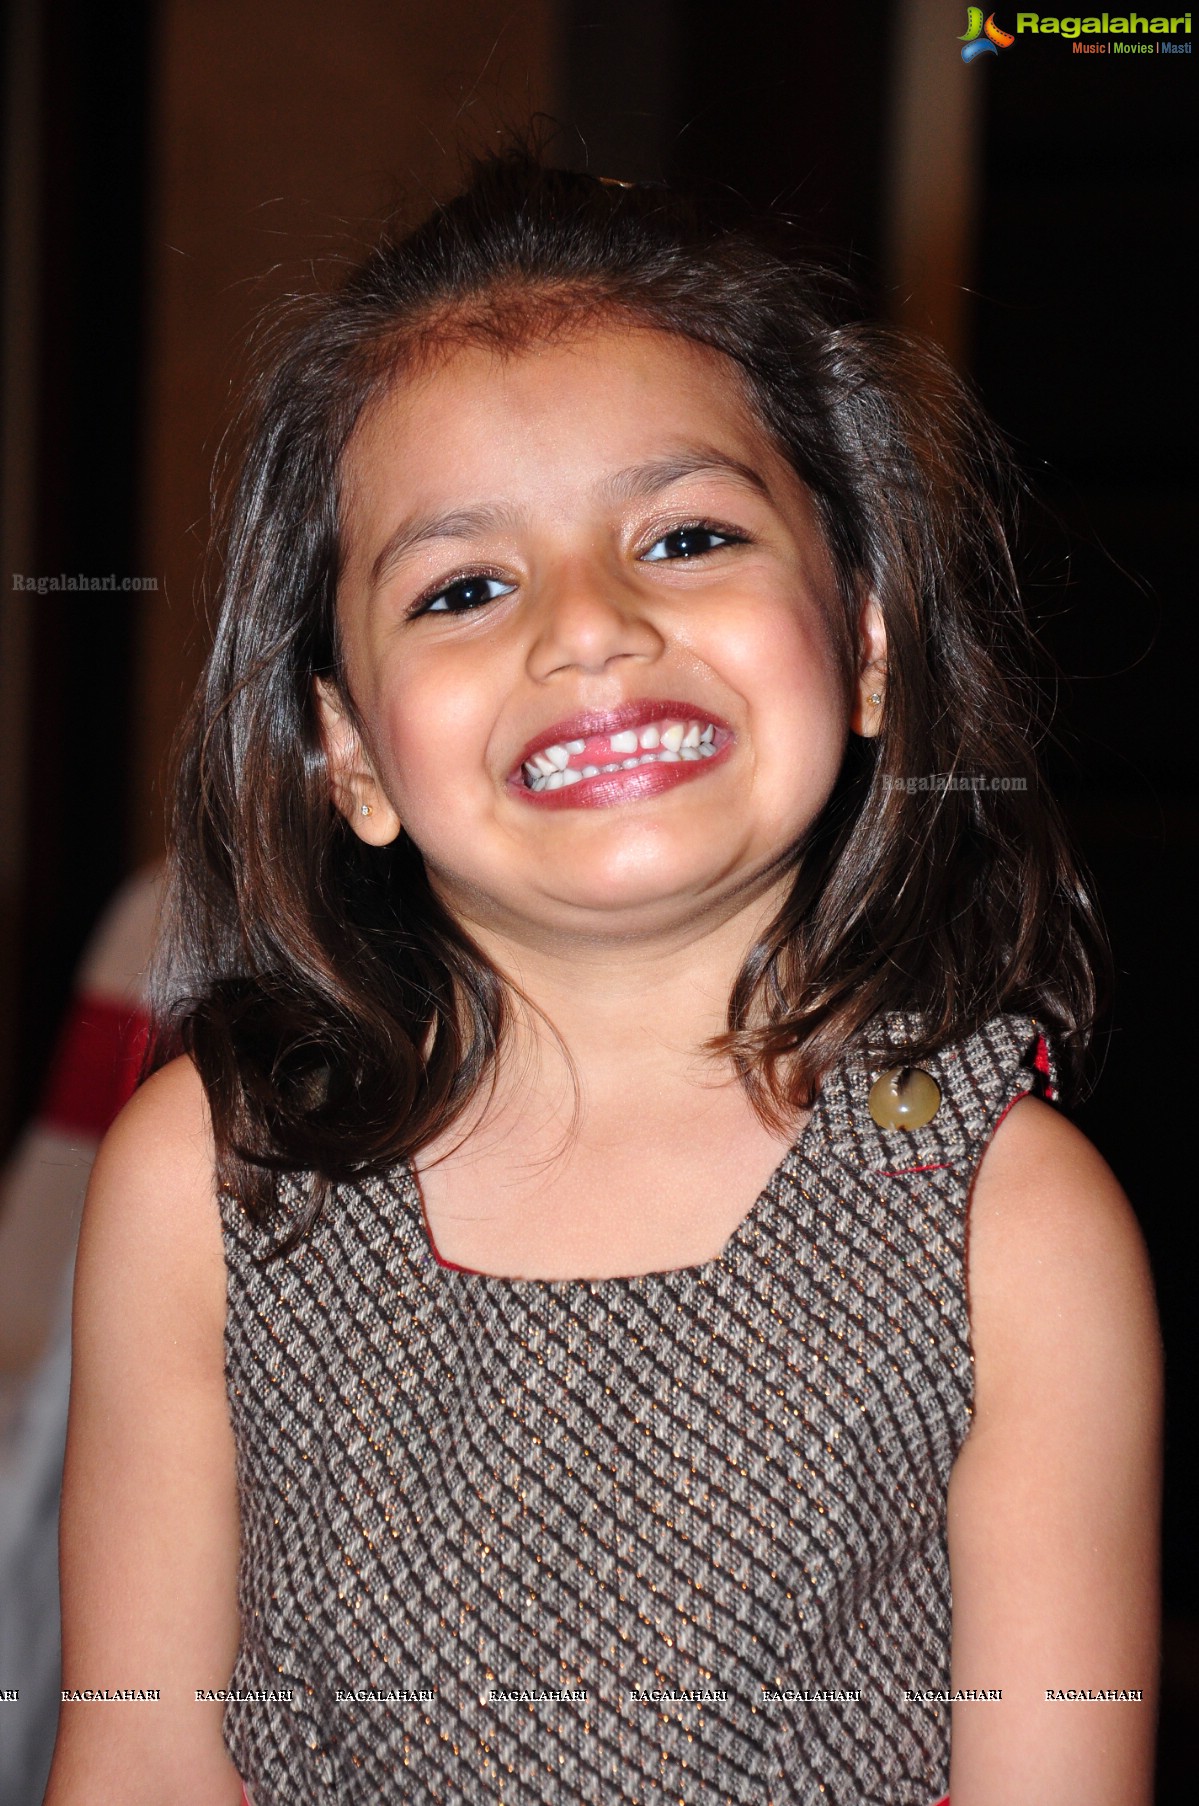 Gold Star Awards for Kids on Parisha's 4th Birthday at Casa Luxurio, Hyderabad